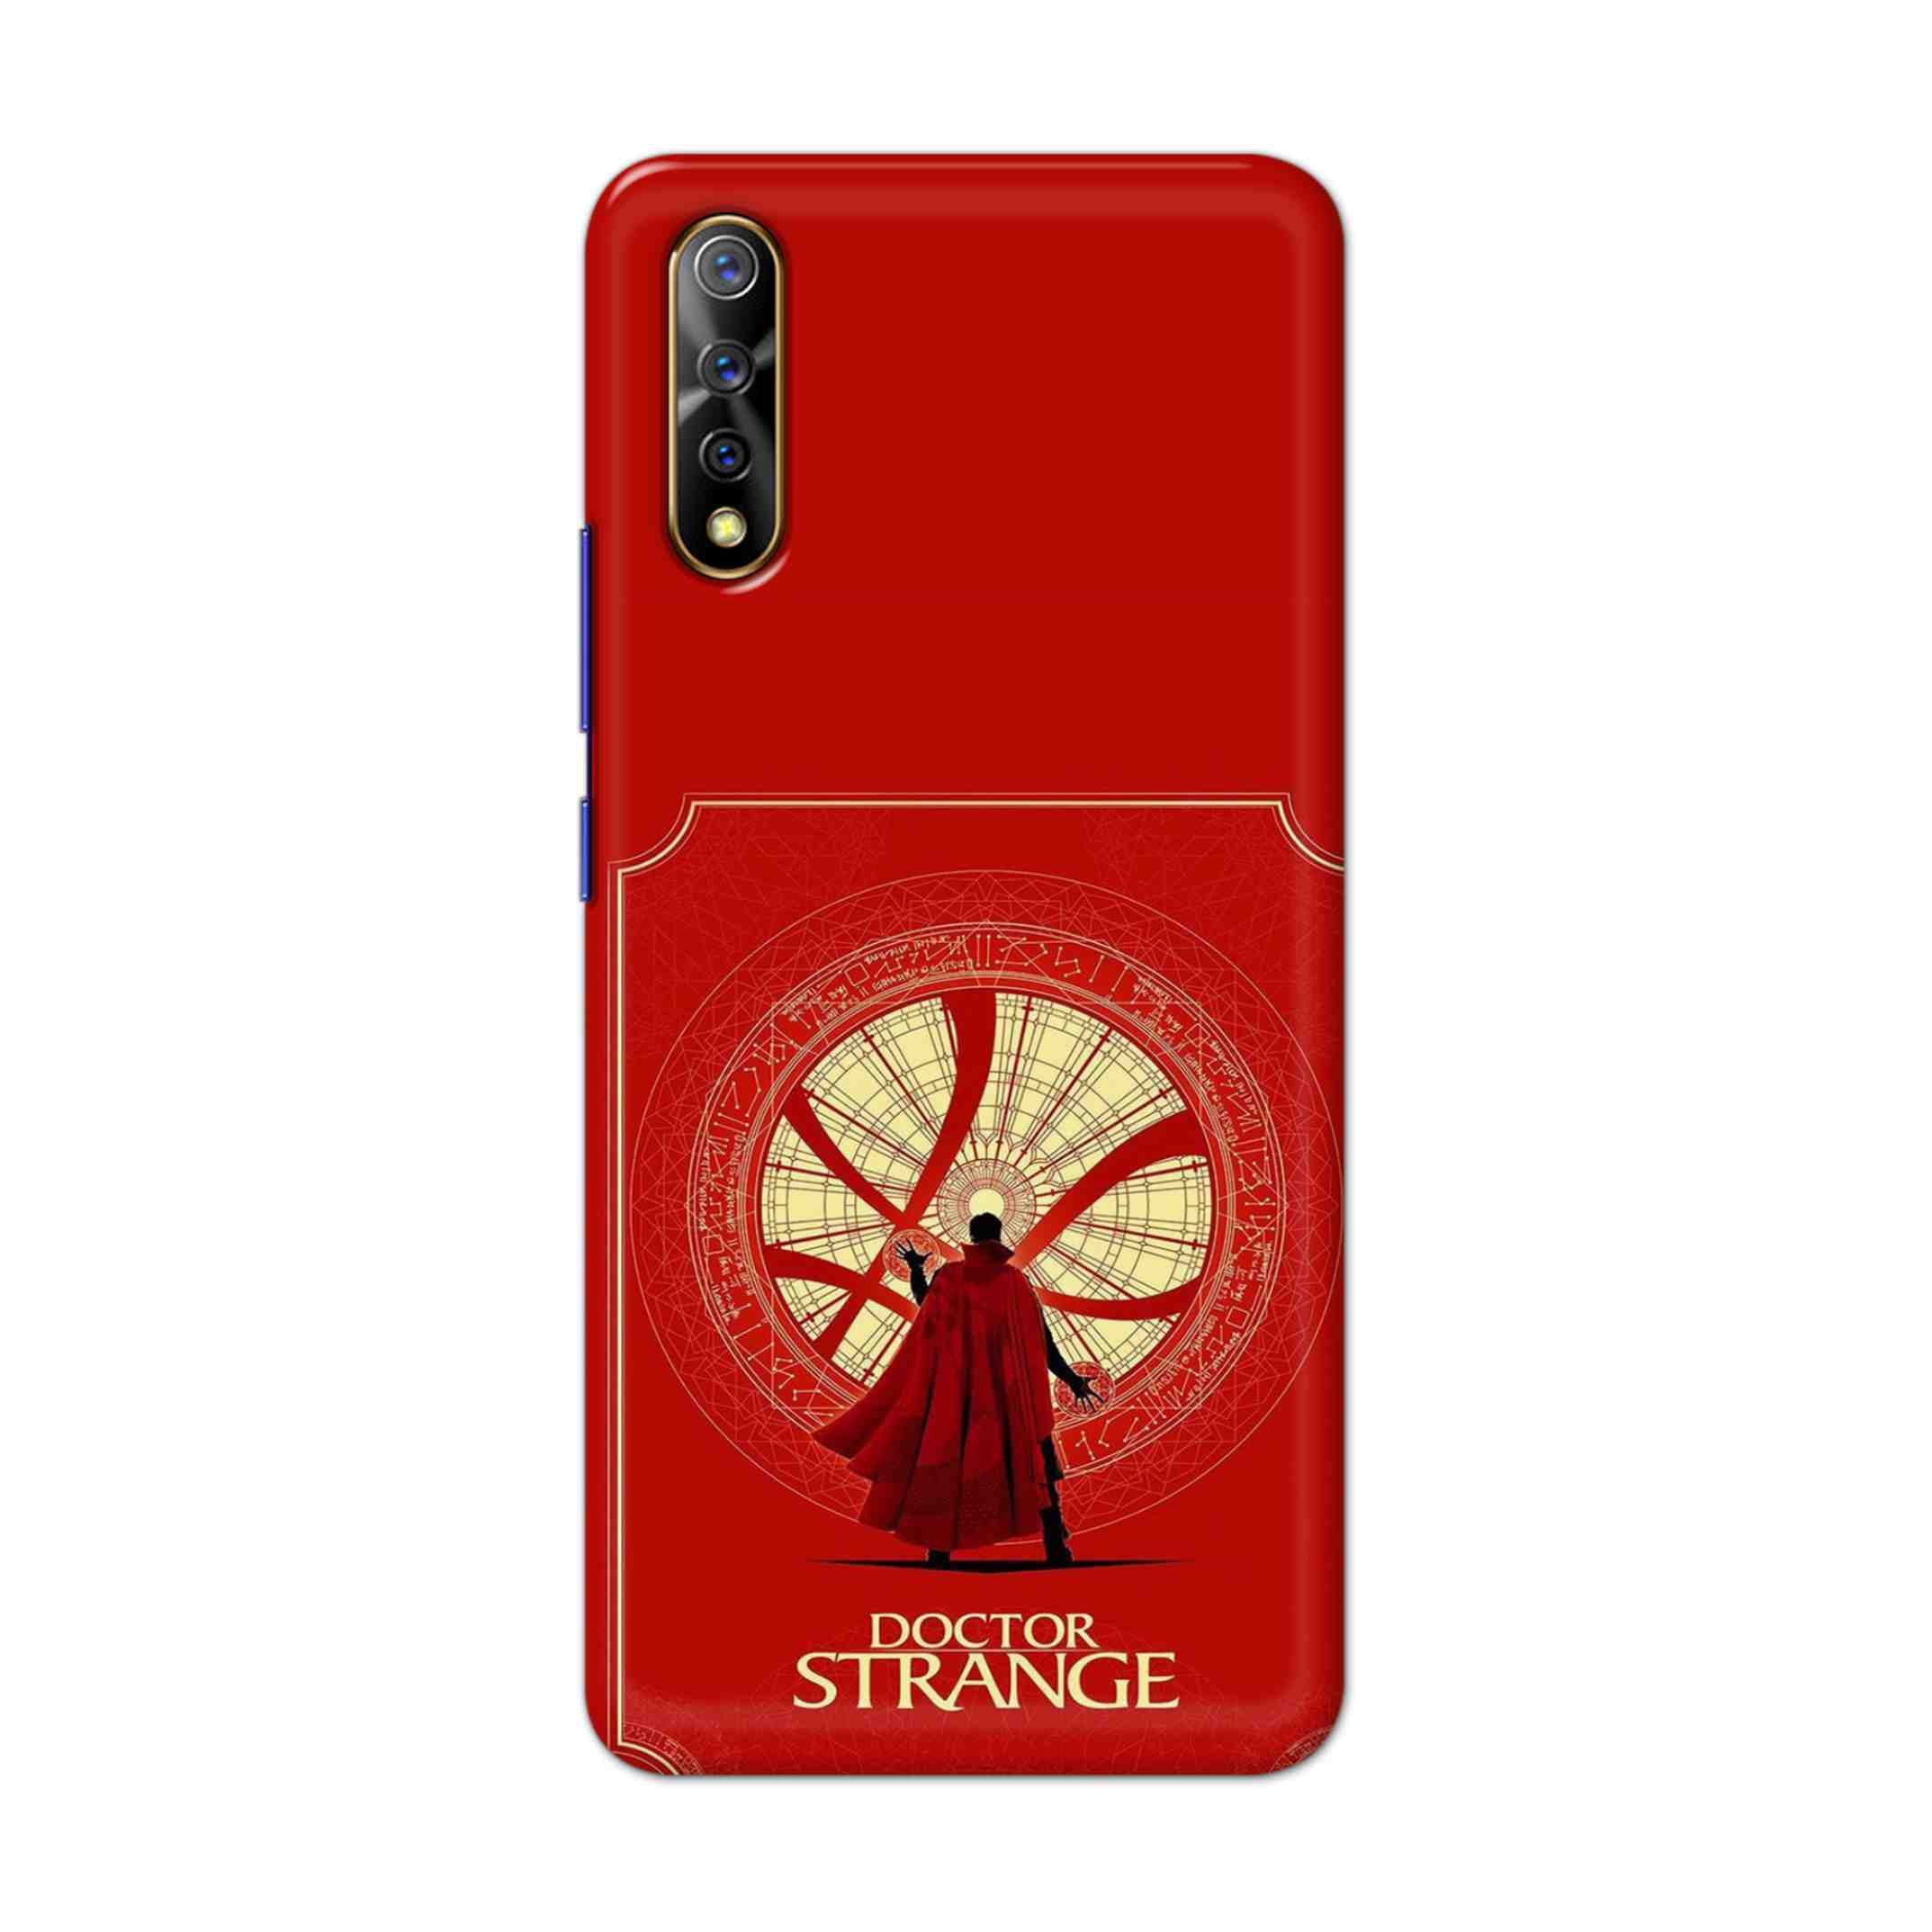 Buy Blood Doctor Strange Hard Back Mobile Phone Case Cover For Vivo S1 / Z1x Online